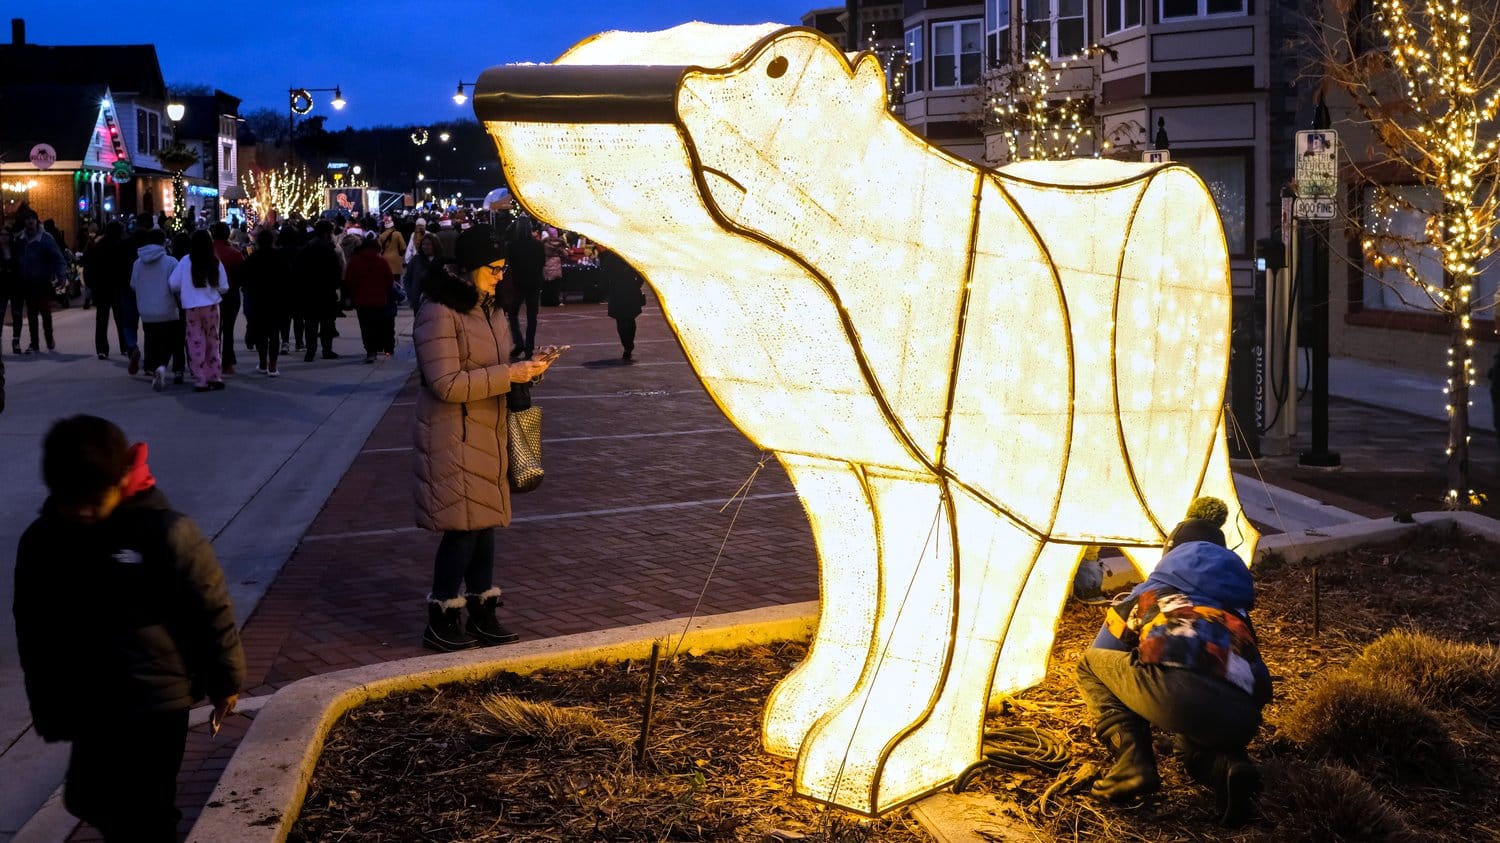 Children playing around lighted polar bear decoration.